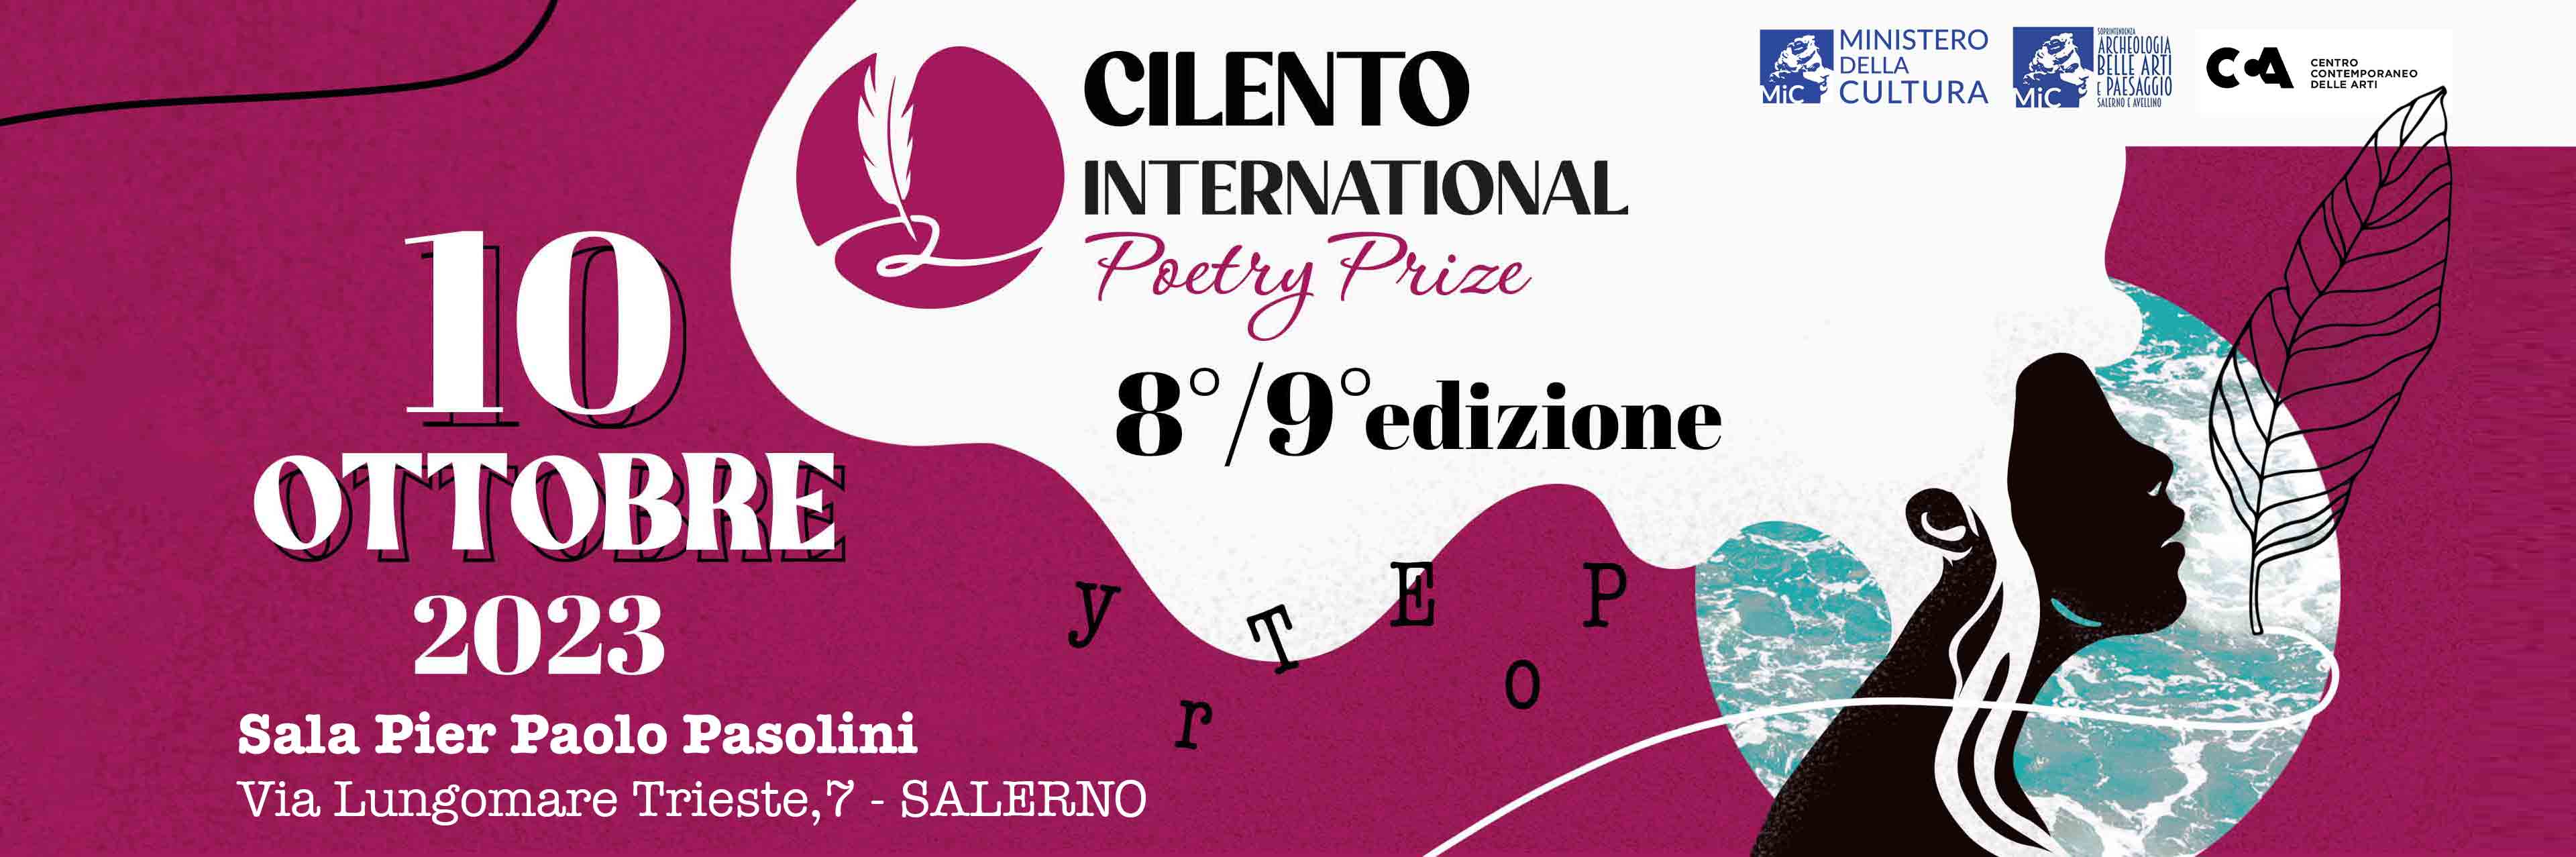 Cilento International Poetry Prize